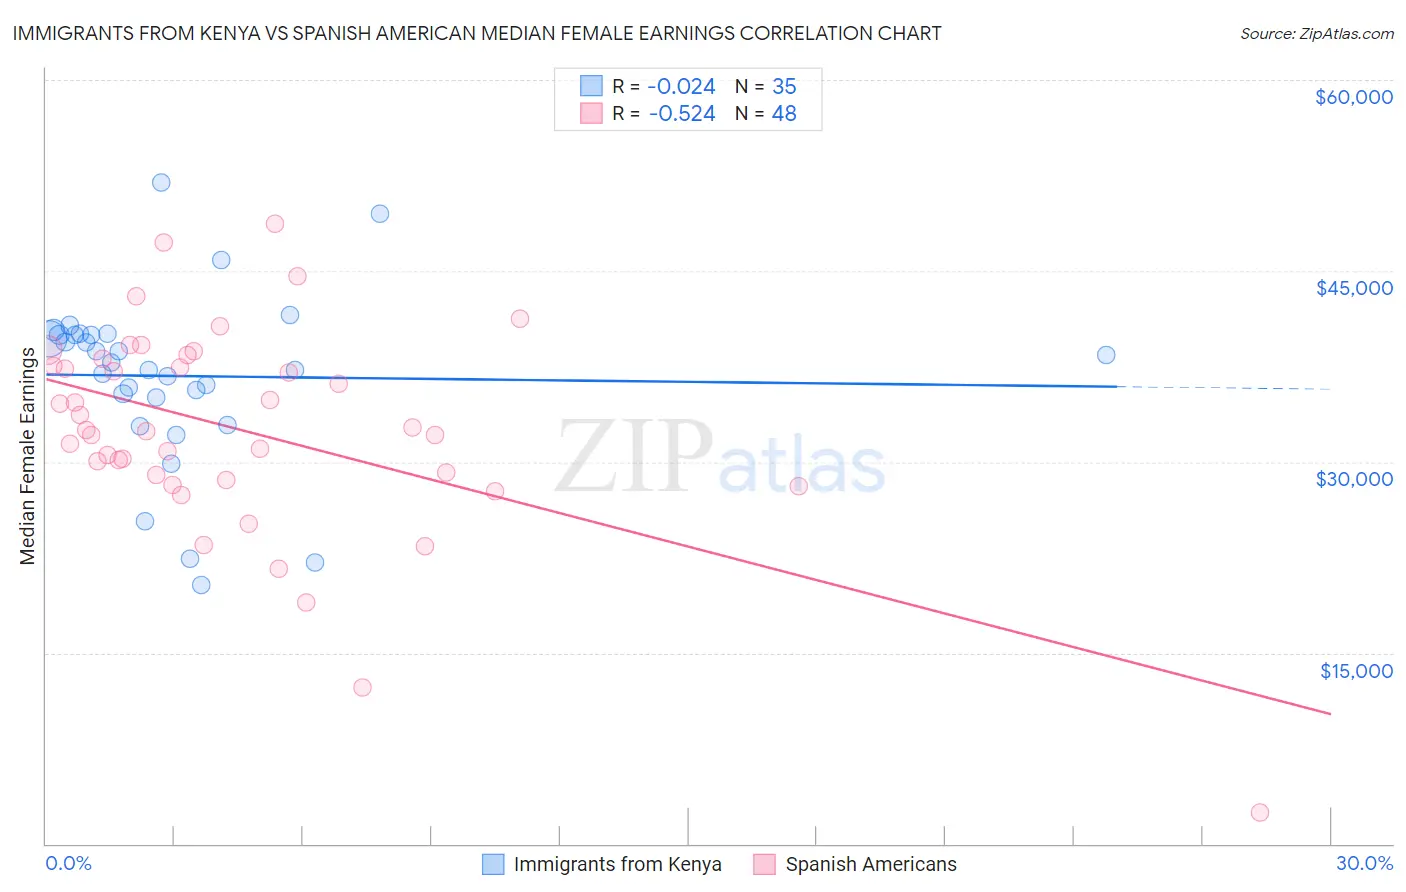 Immigrants from Kenya vs Spanish American Median Female Earnings